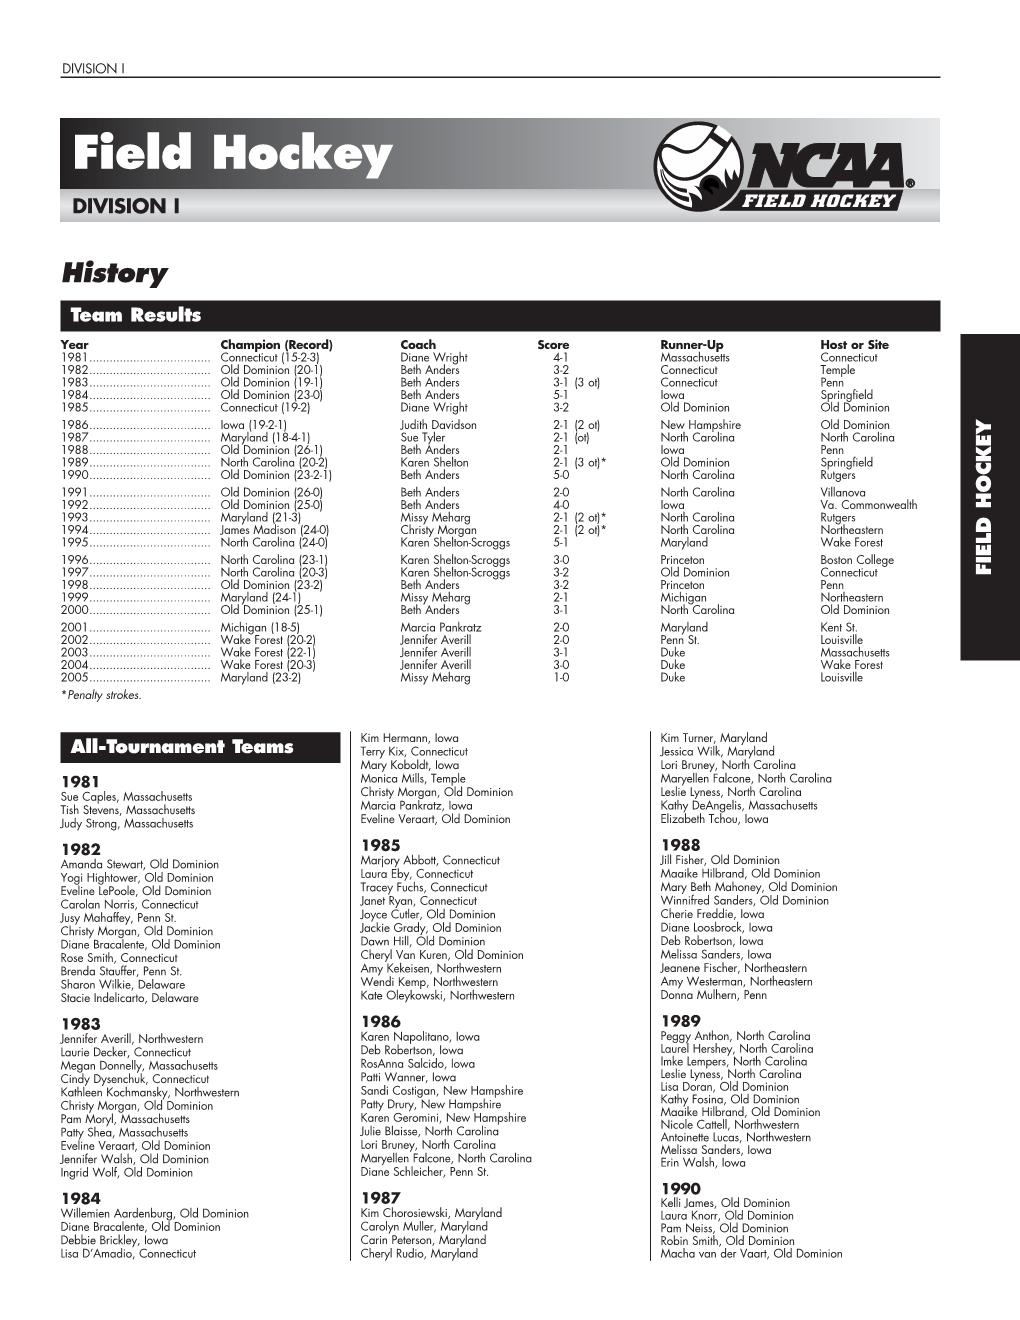 2005 NCAA Field Hockey Championship Records Book